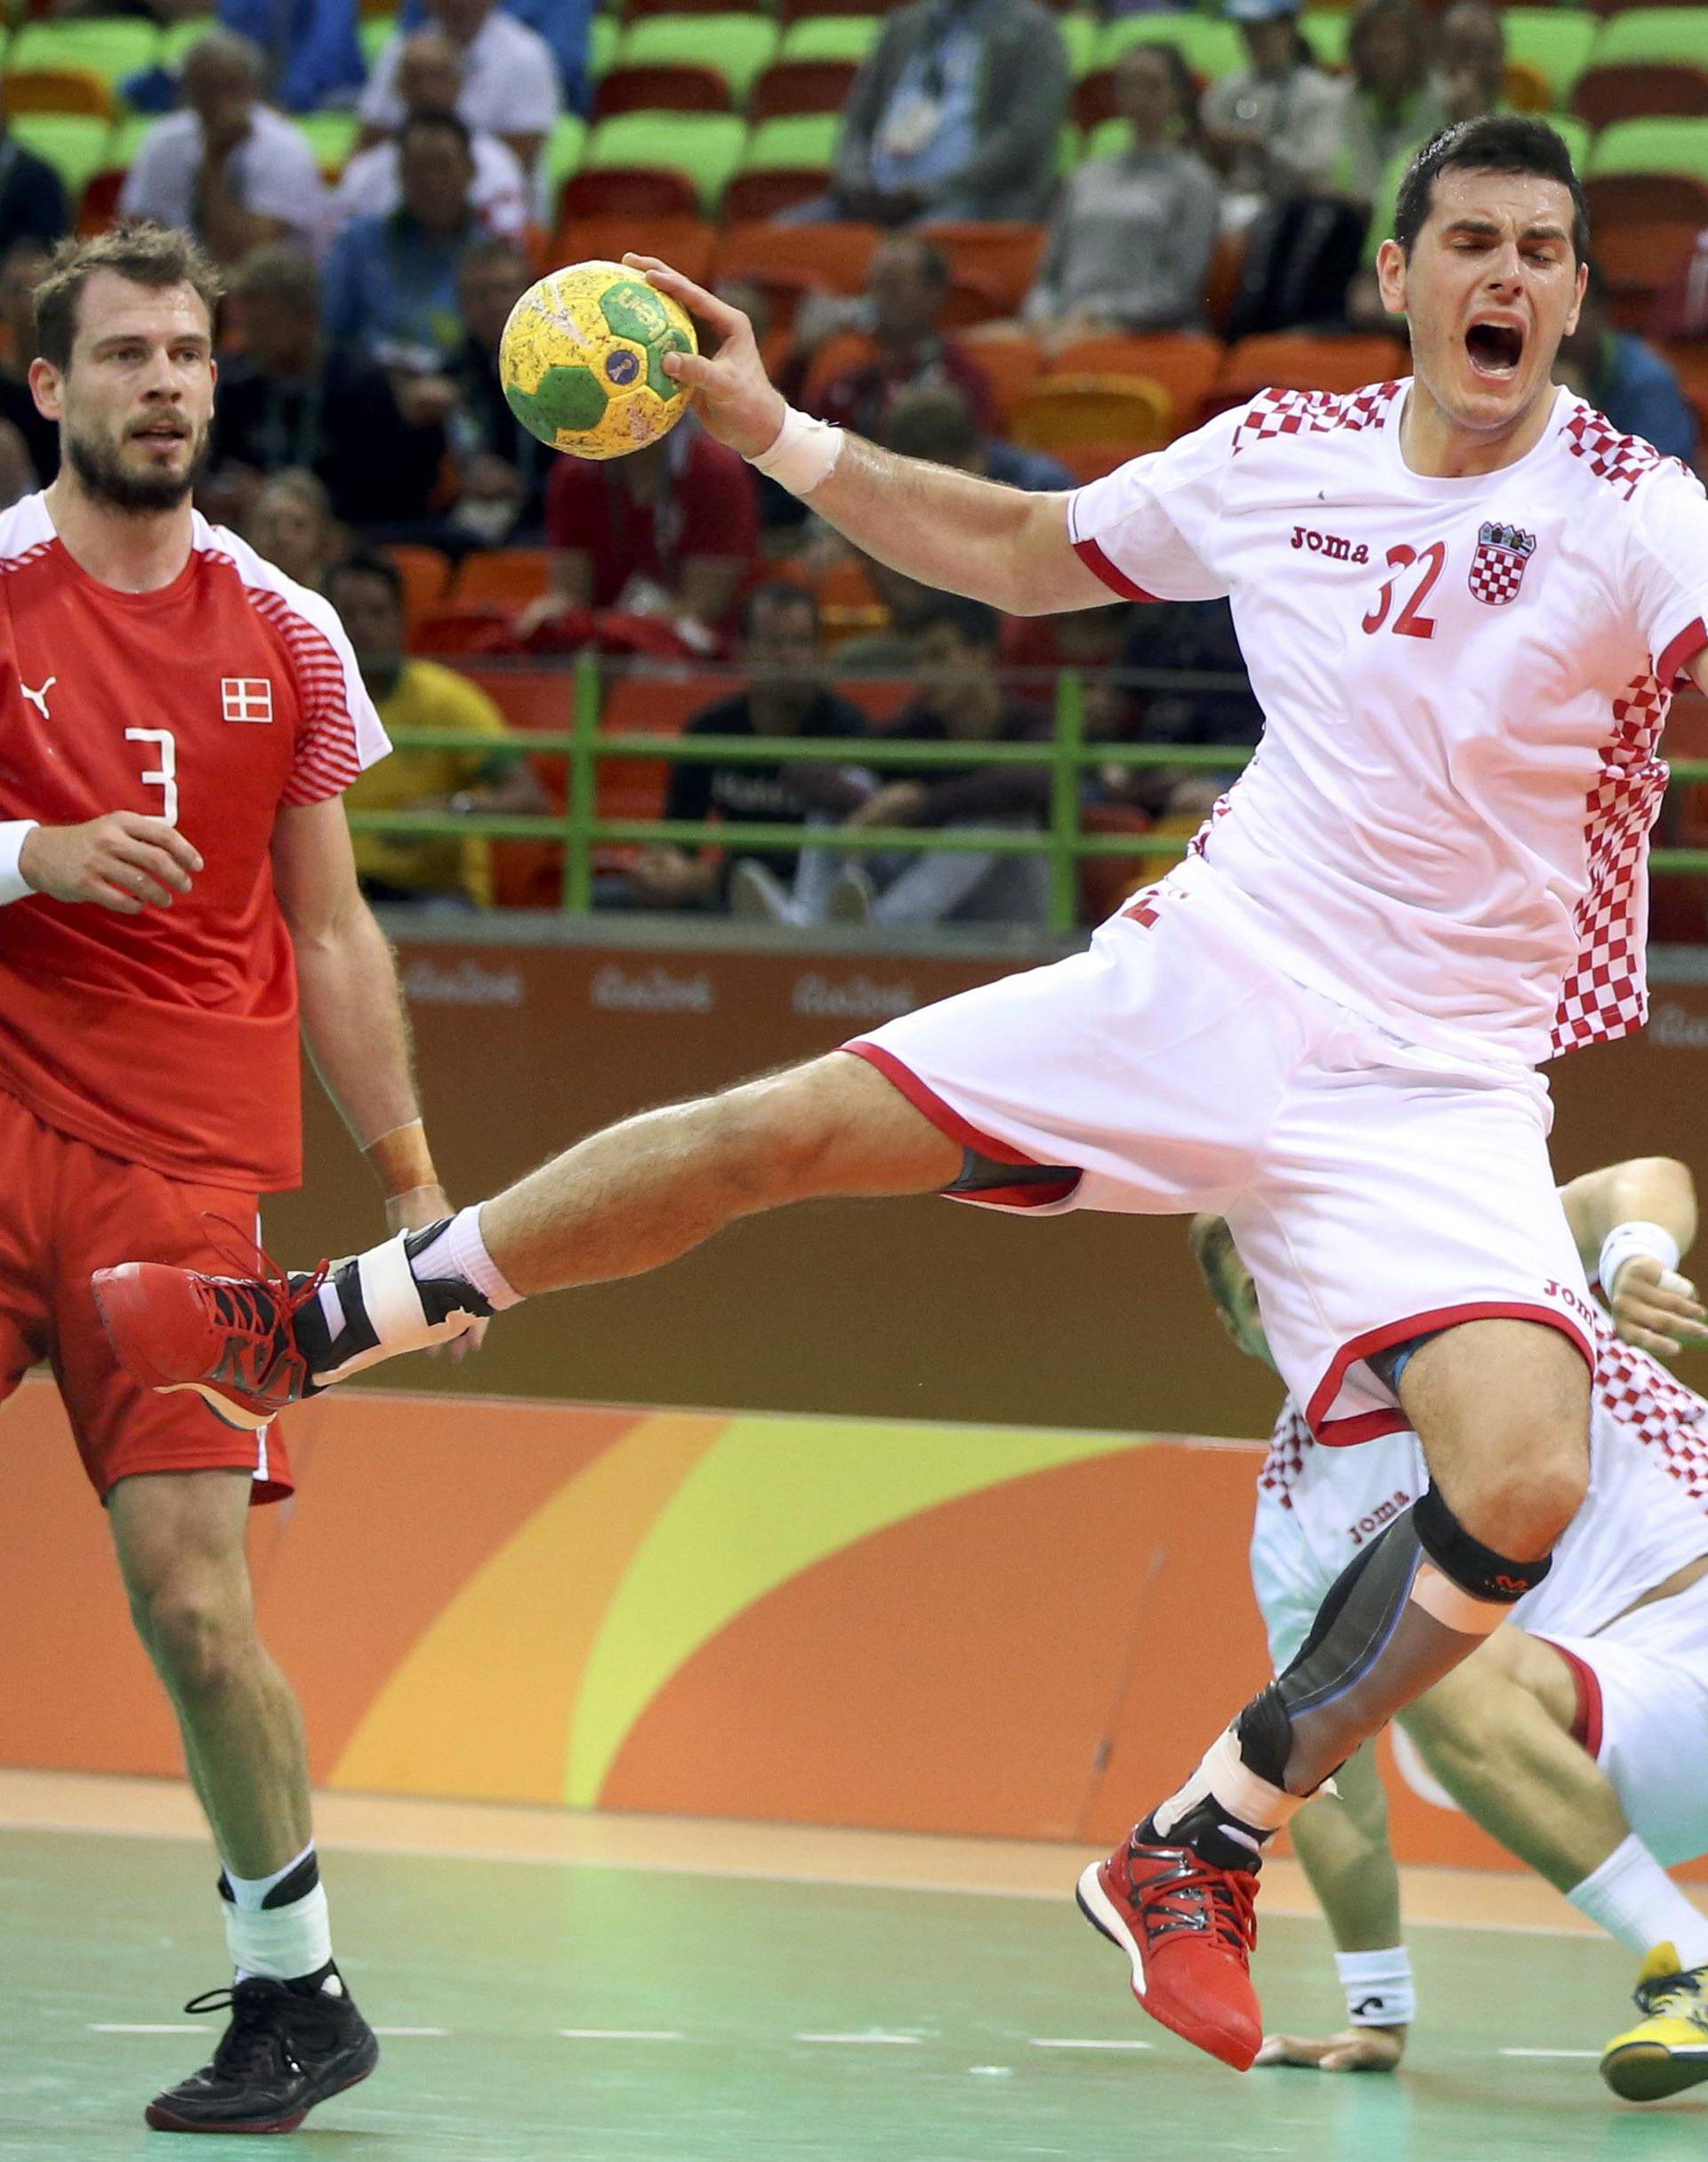 Handball - Men's Preliminary Group A Denmark v Croatia